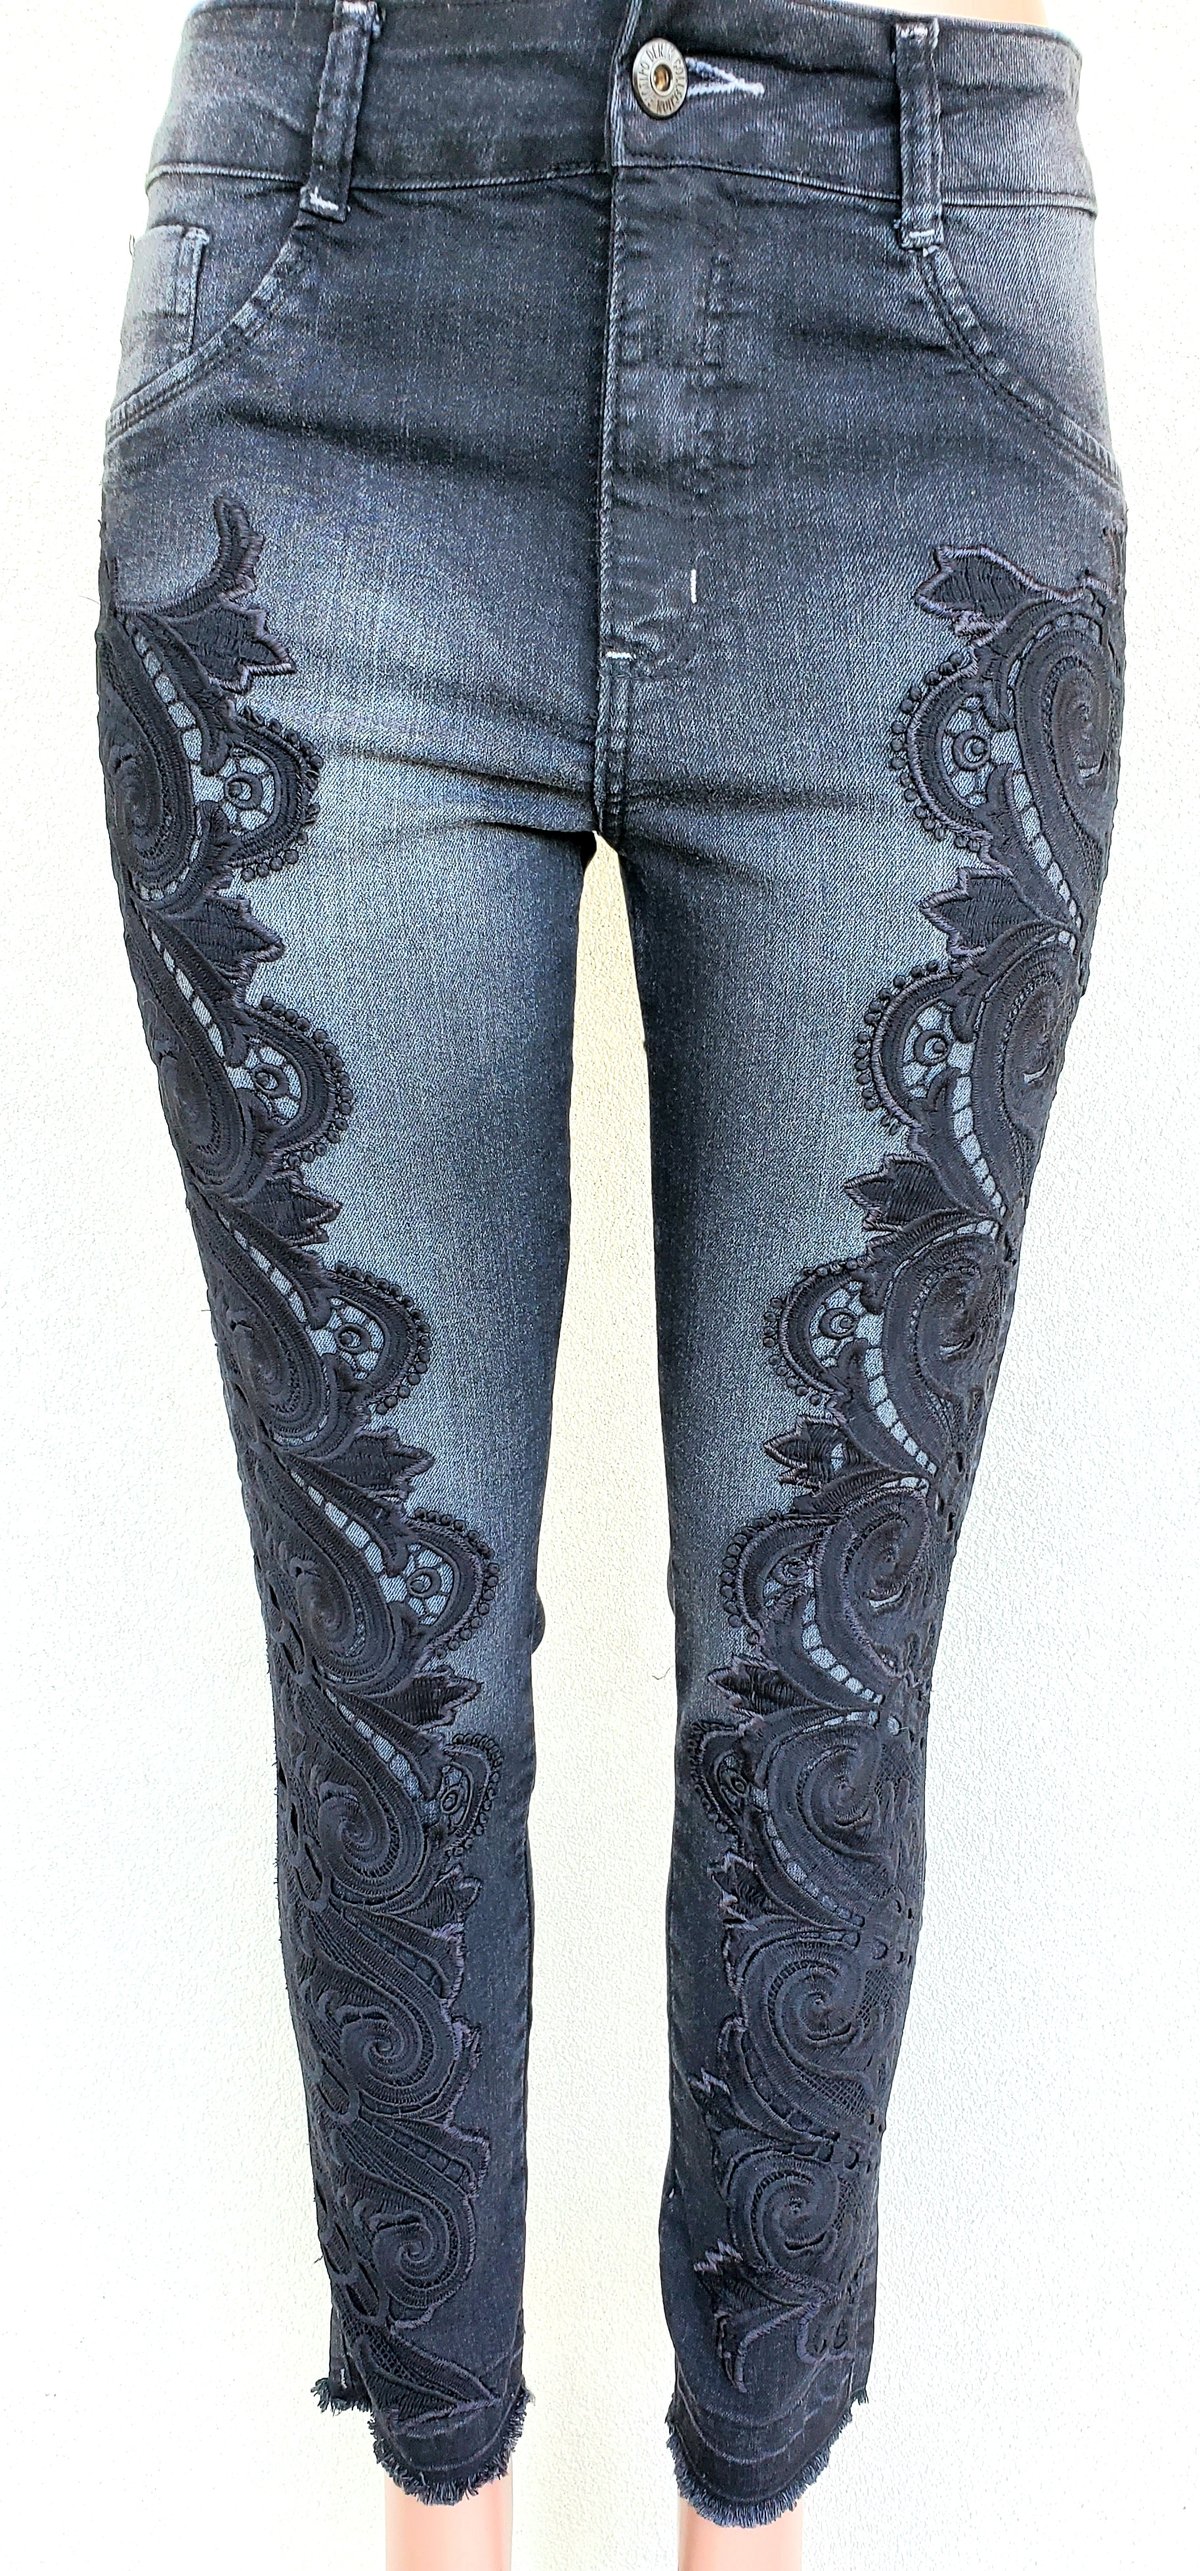 Wavy Black Lace Jeans BR329